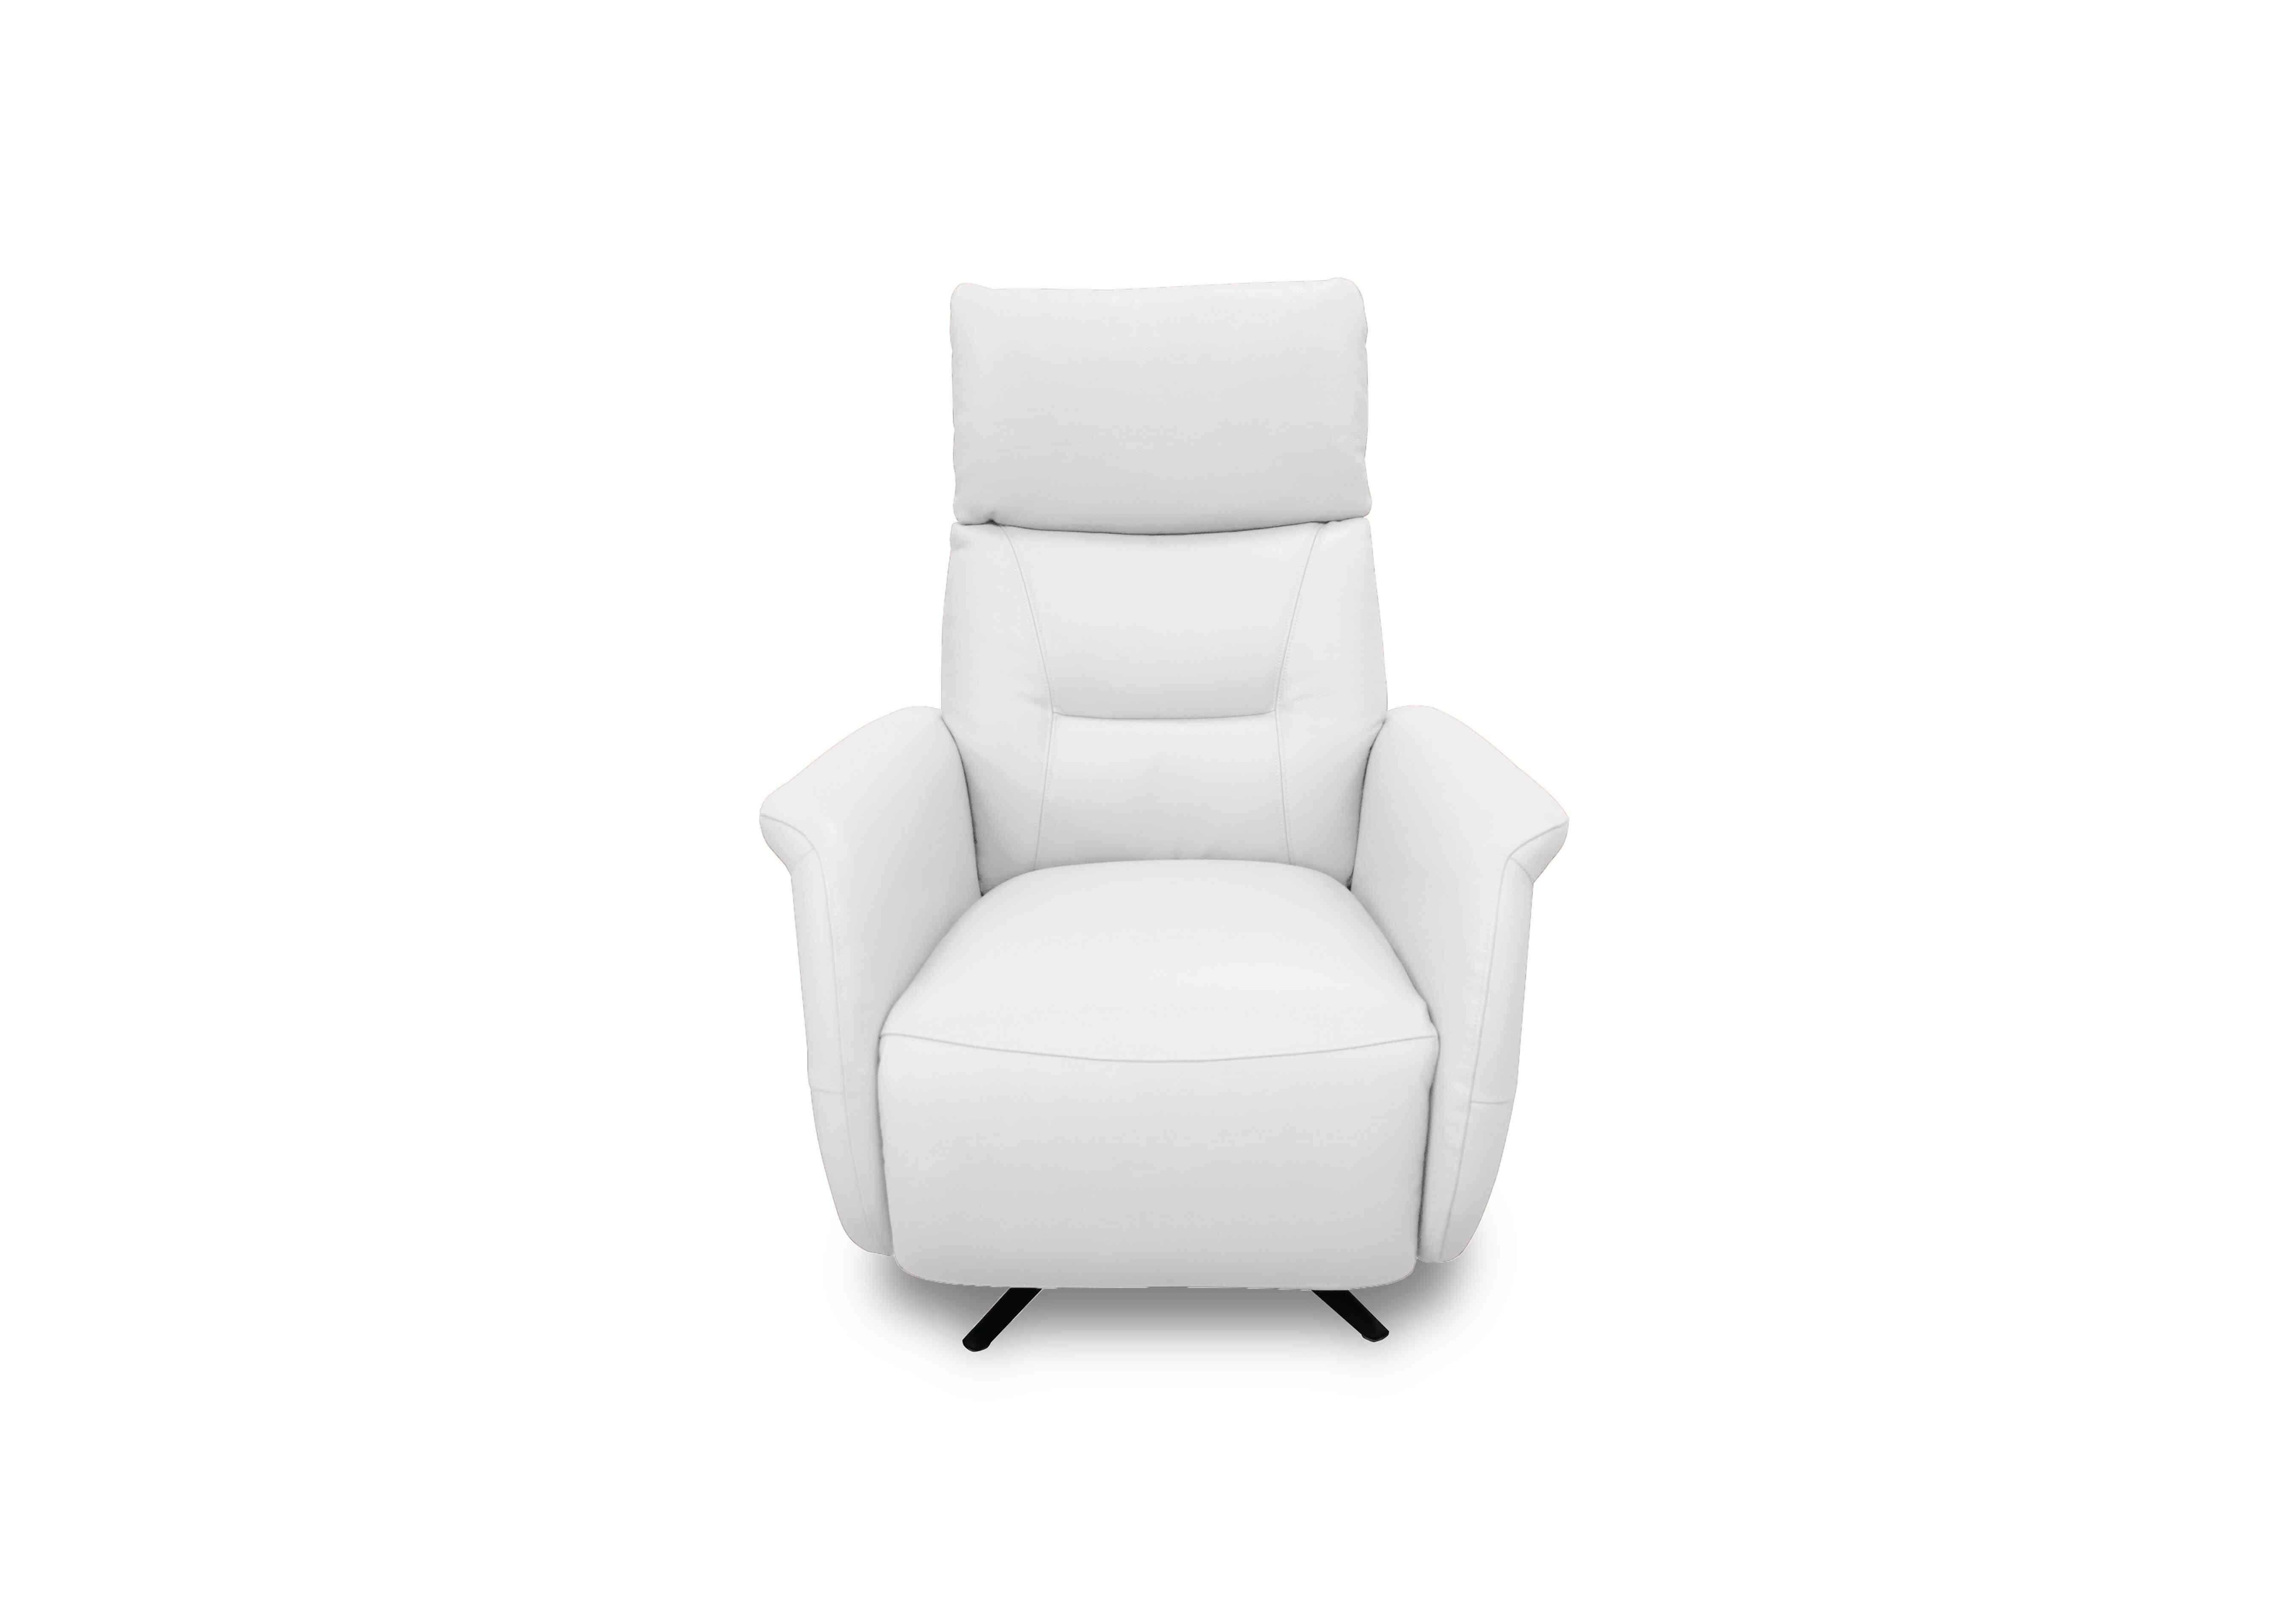 Designer Chair Collection Dusseldorf Leather Power Recliner Swivel Chair in Bv-744d Star White on Furniture Village